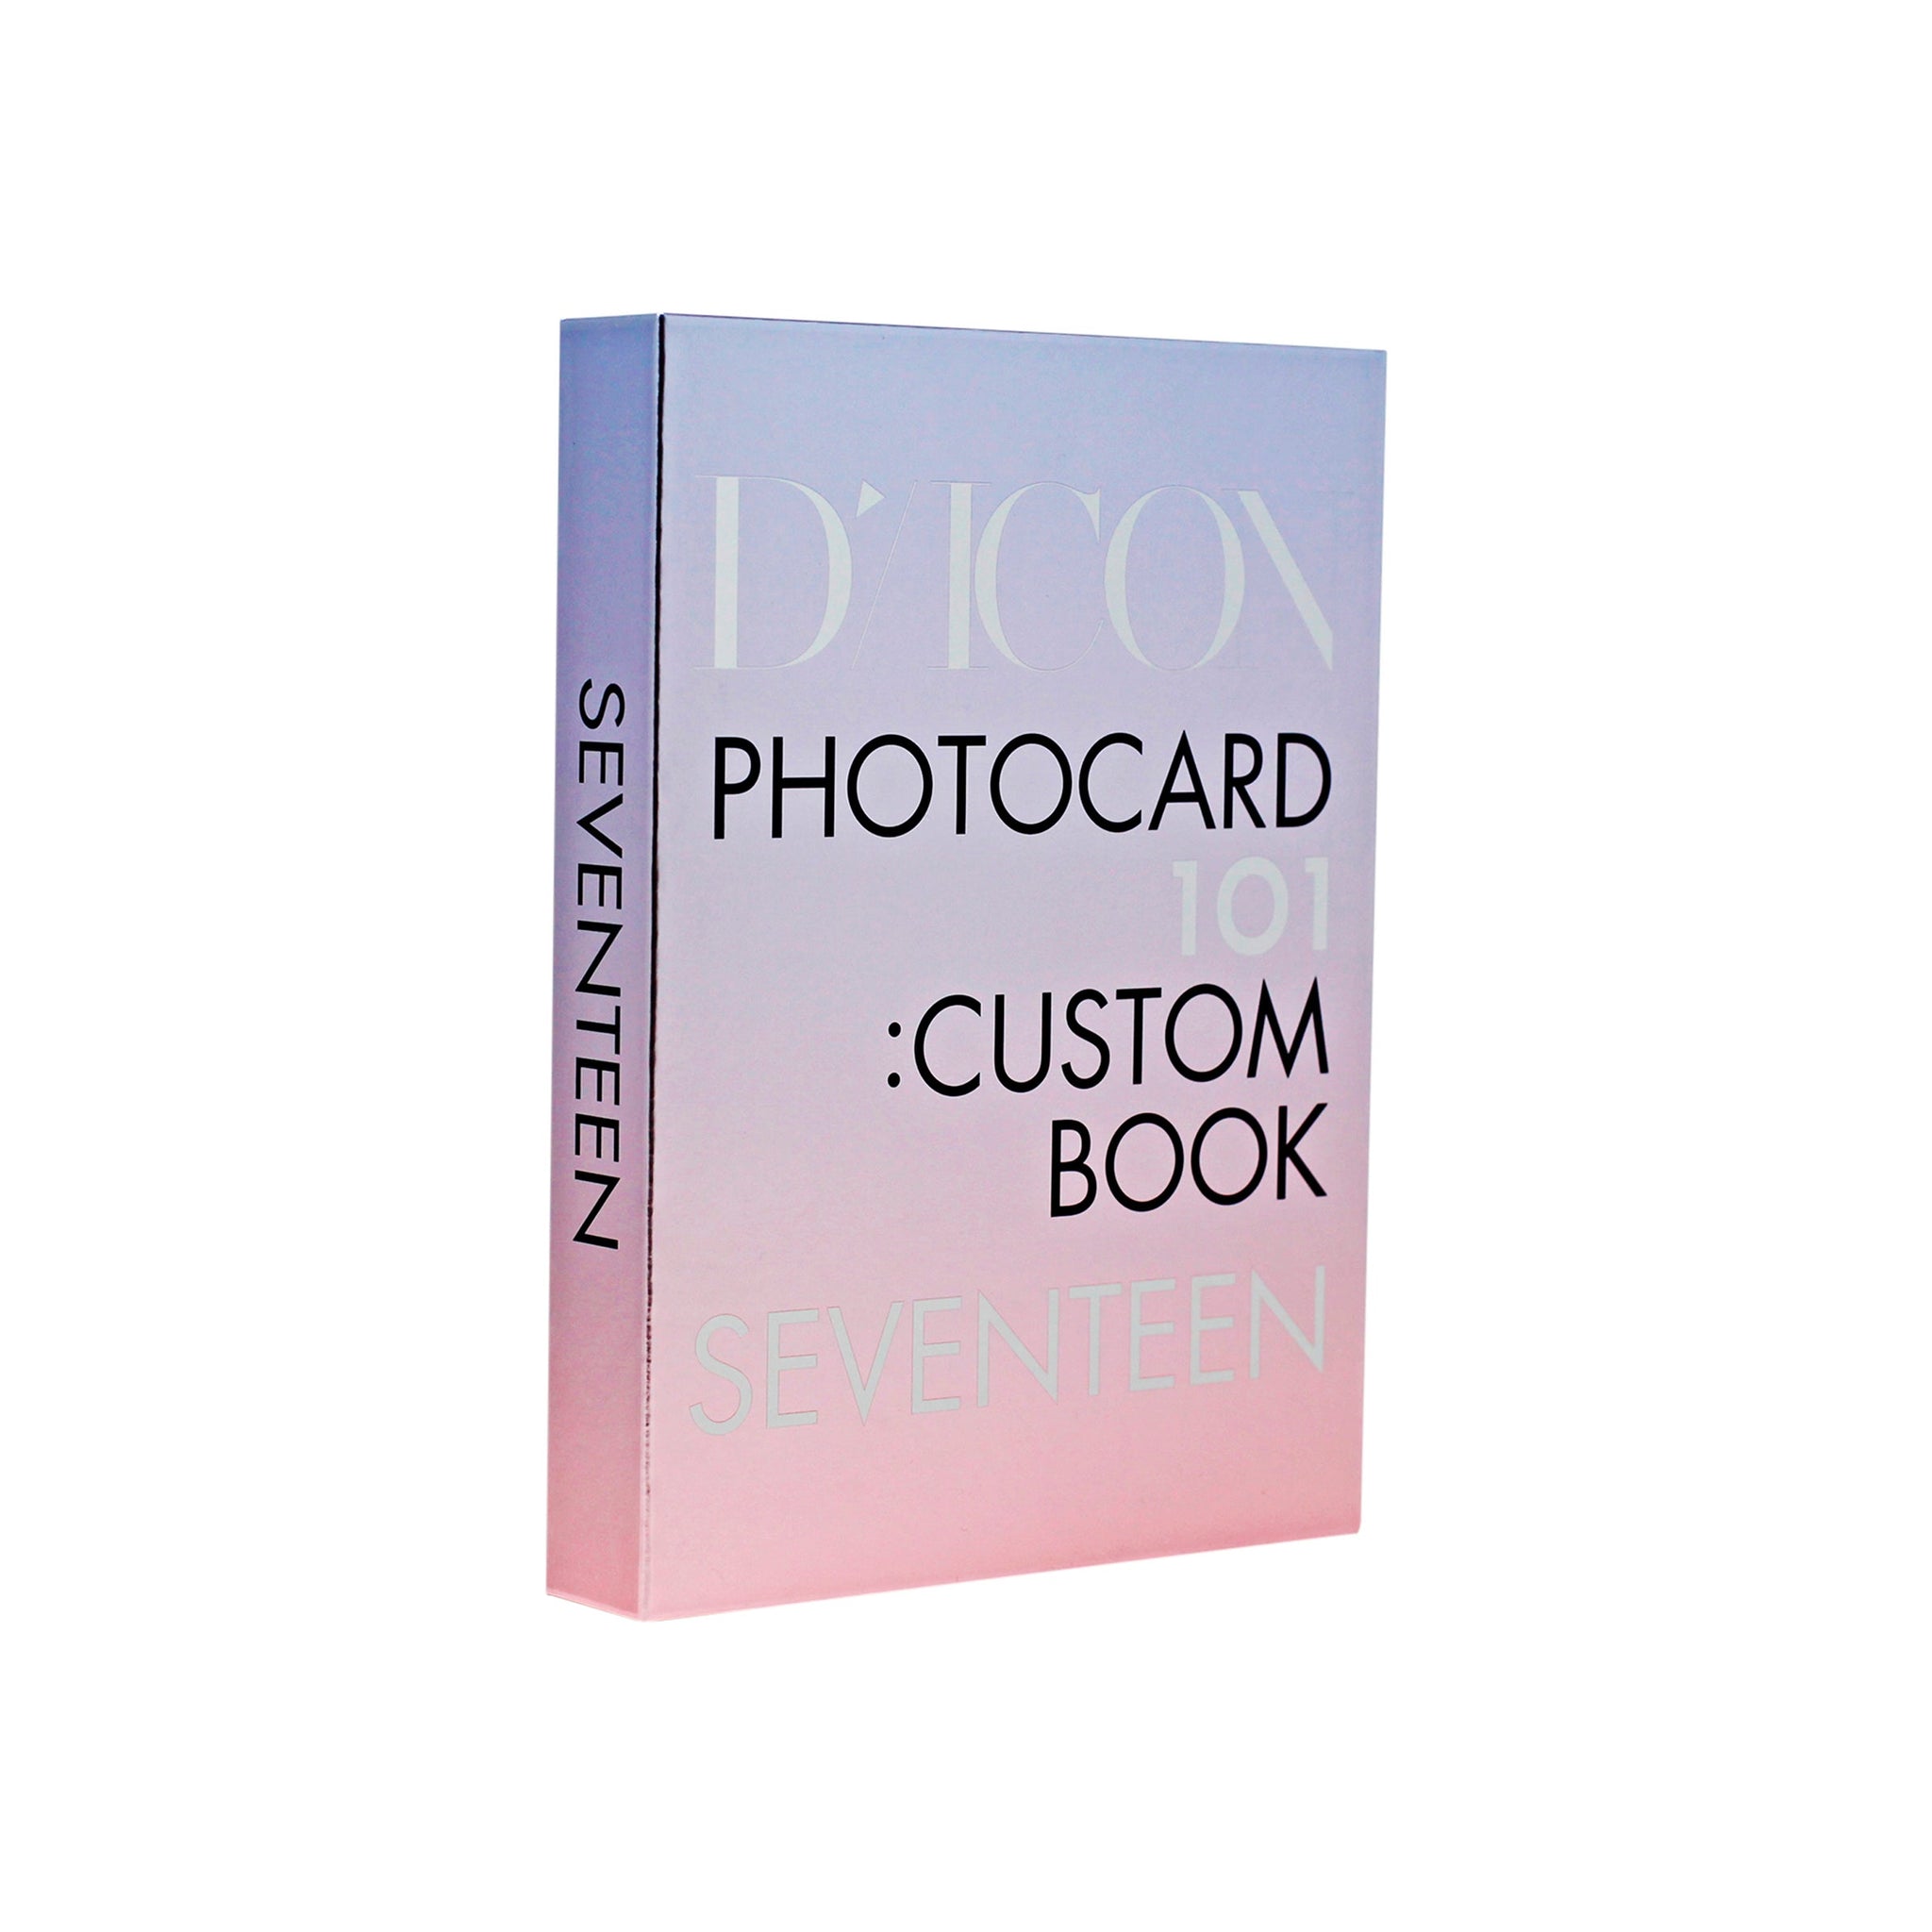 SEVENTEEN DICON PHOTOCARD 101 : CUSTOM BOOK Binder Photocard case